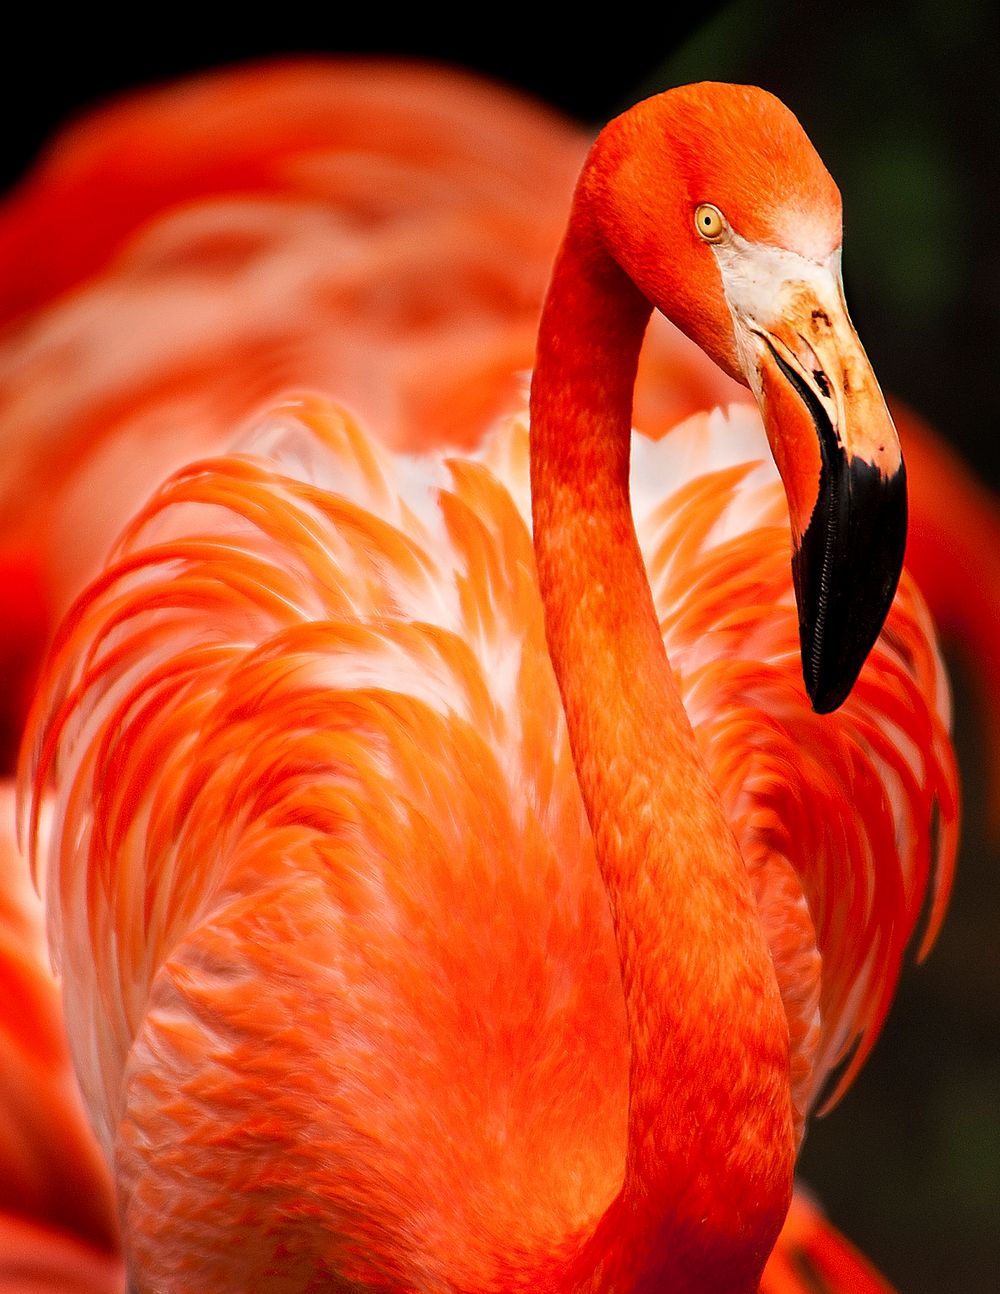 Orange bird. Original public domain image from Wikimedia Commons